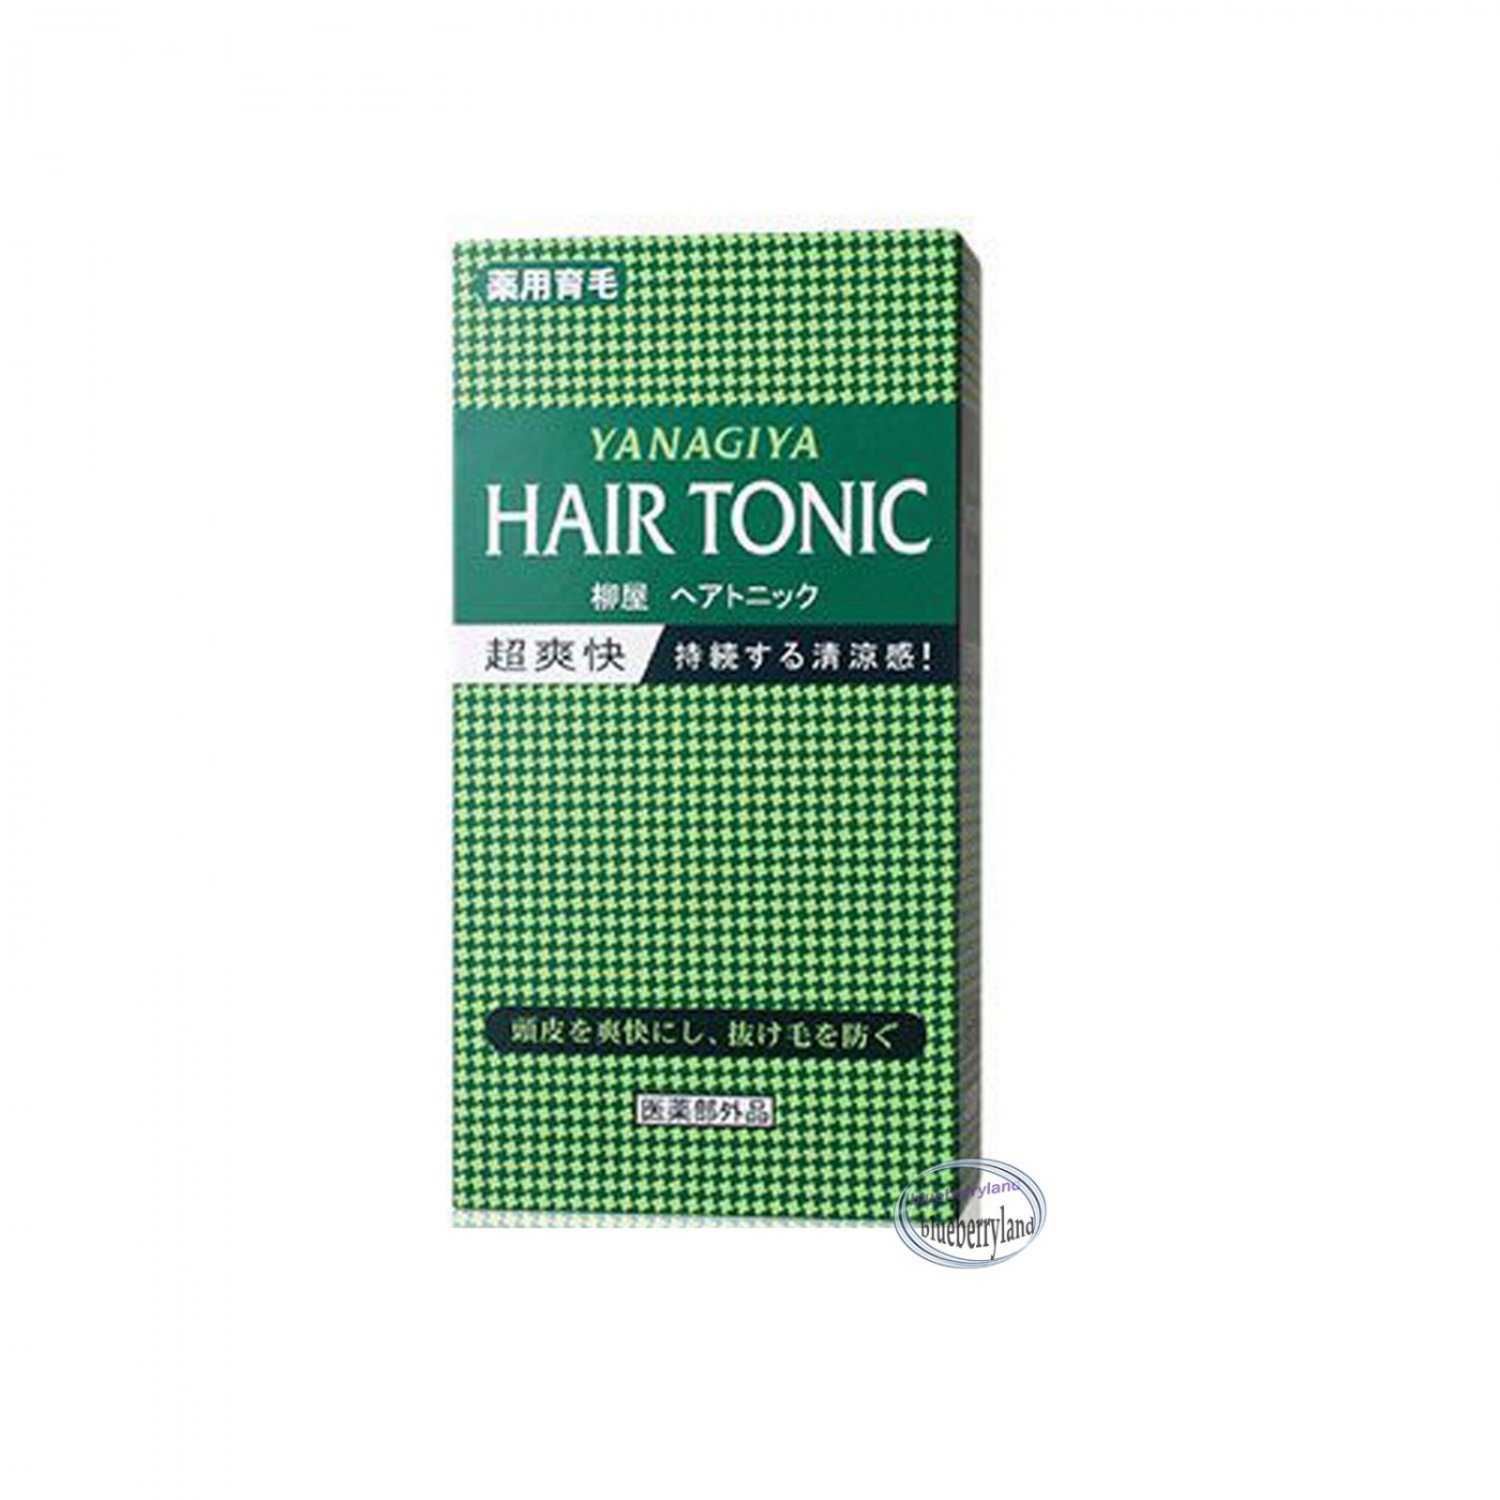 Japan Yanagiya Hair Tonic Growth Promotion Loss Treatment 240ml hair care æ�³å±� ã��ã�¢ã��ã��ã��ã�¯